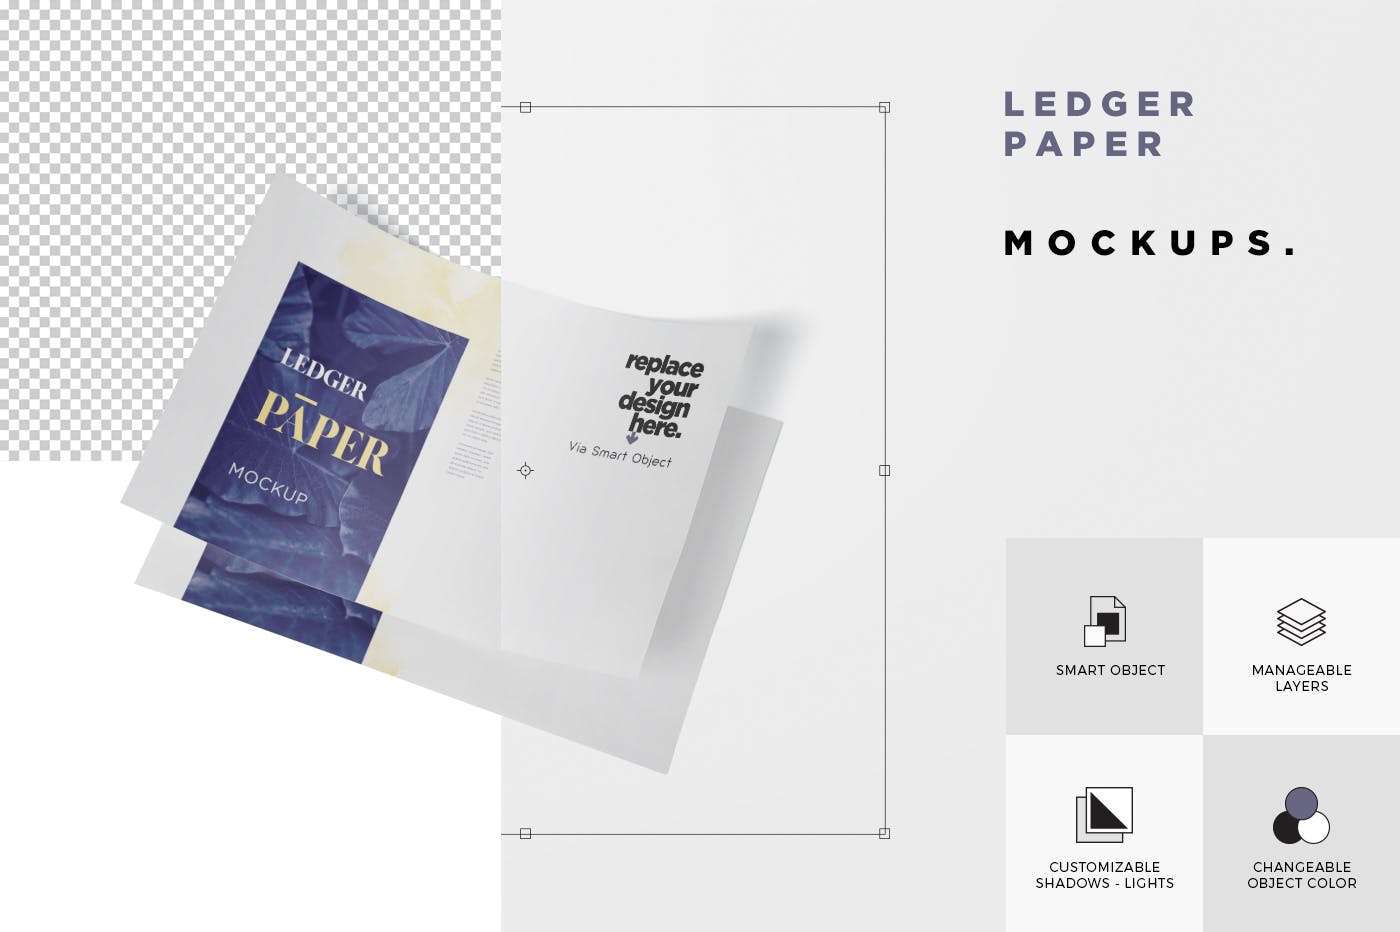 印刷品设计效果图样机第一素材精选模板 Ledger Paper Mockup – 17×11 Inch Size插图(5)